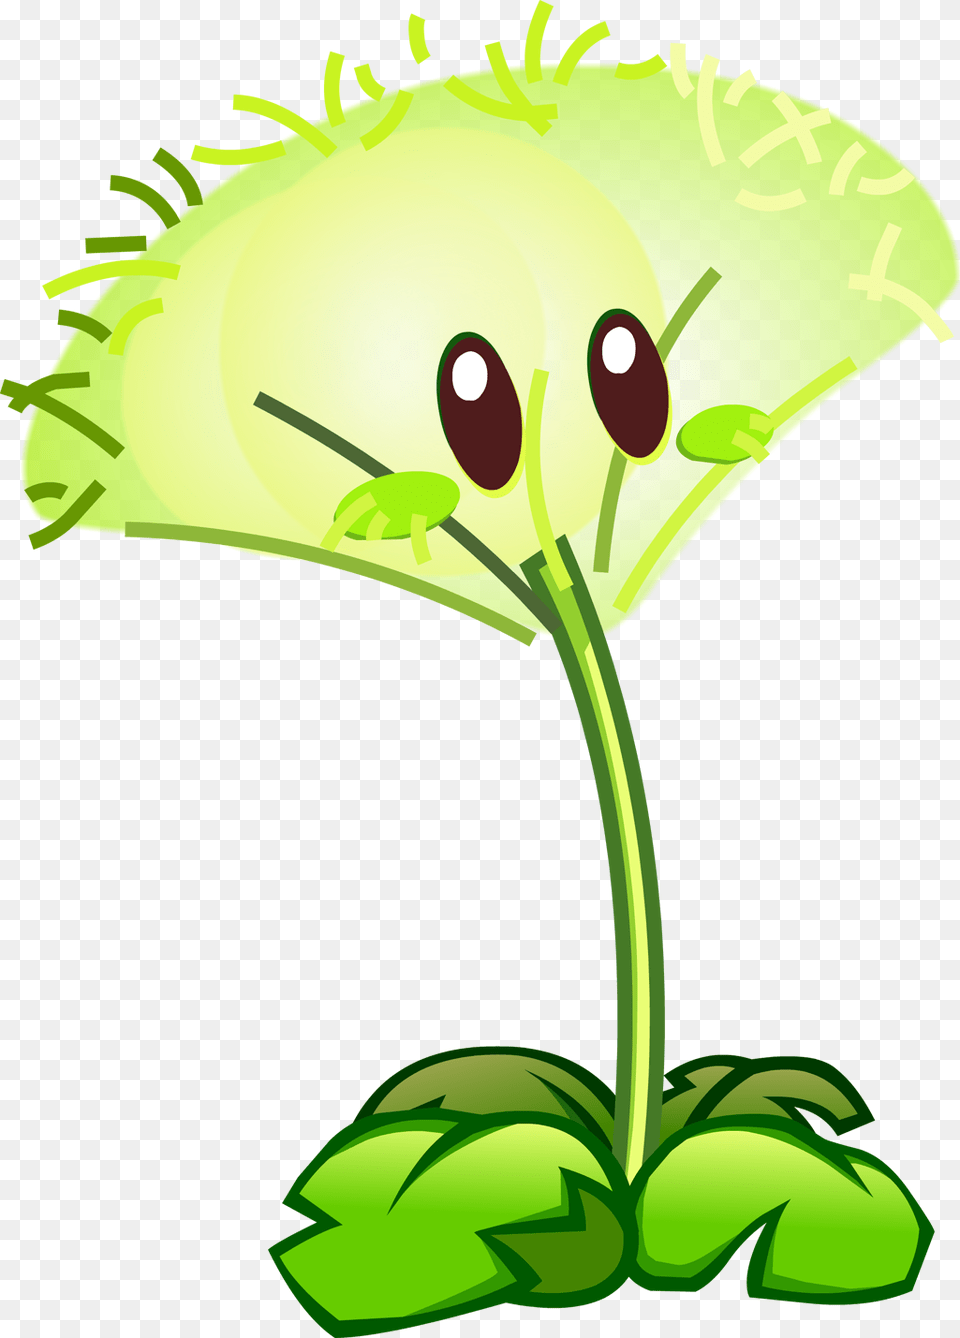 Plants Vs Zombies 2 Online Plantas, Bud, Flower, Green, Leaf Free Png Download